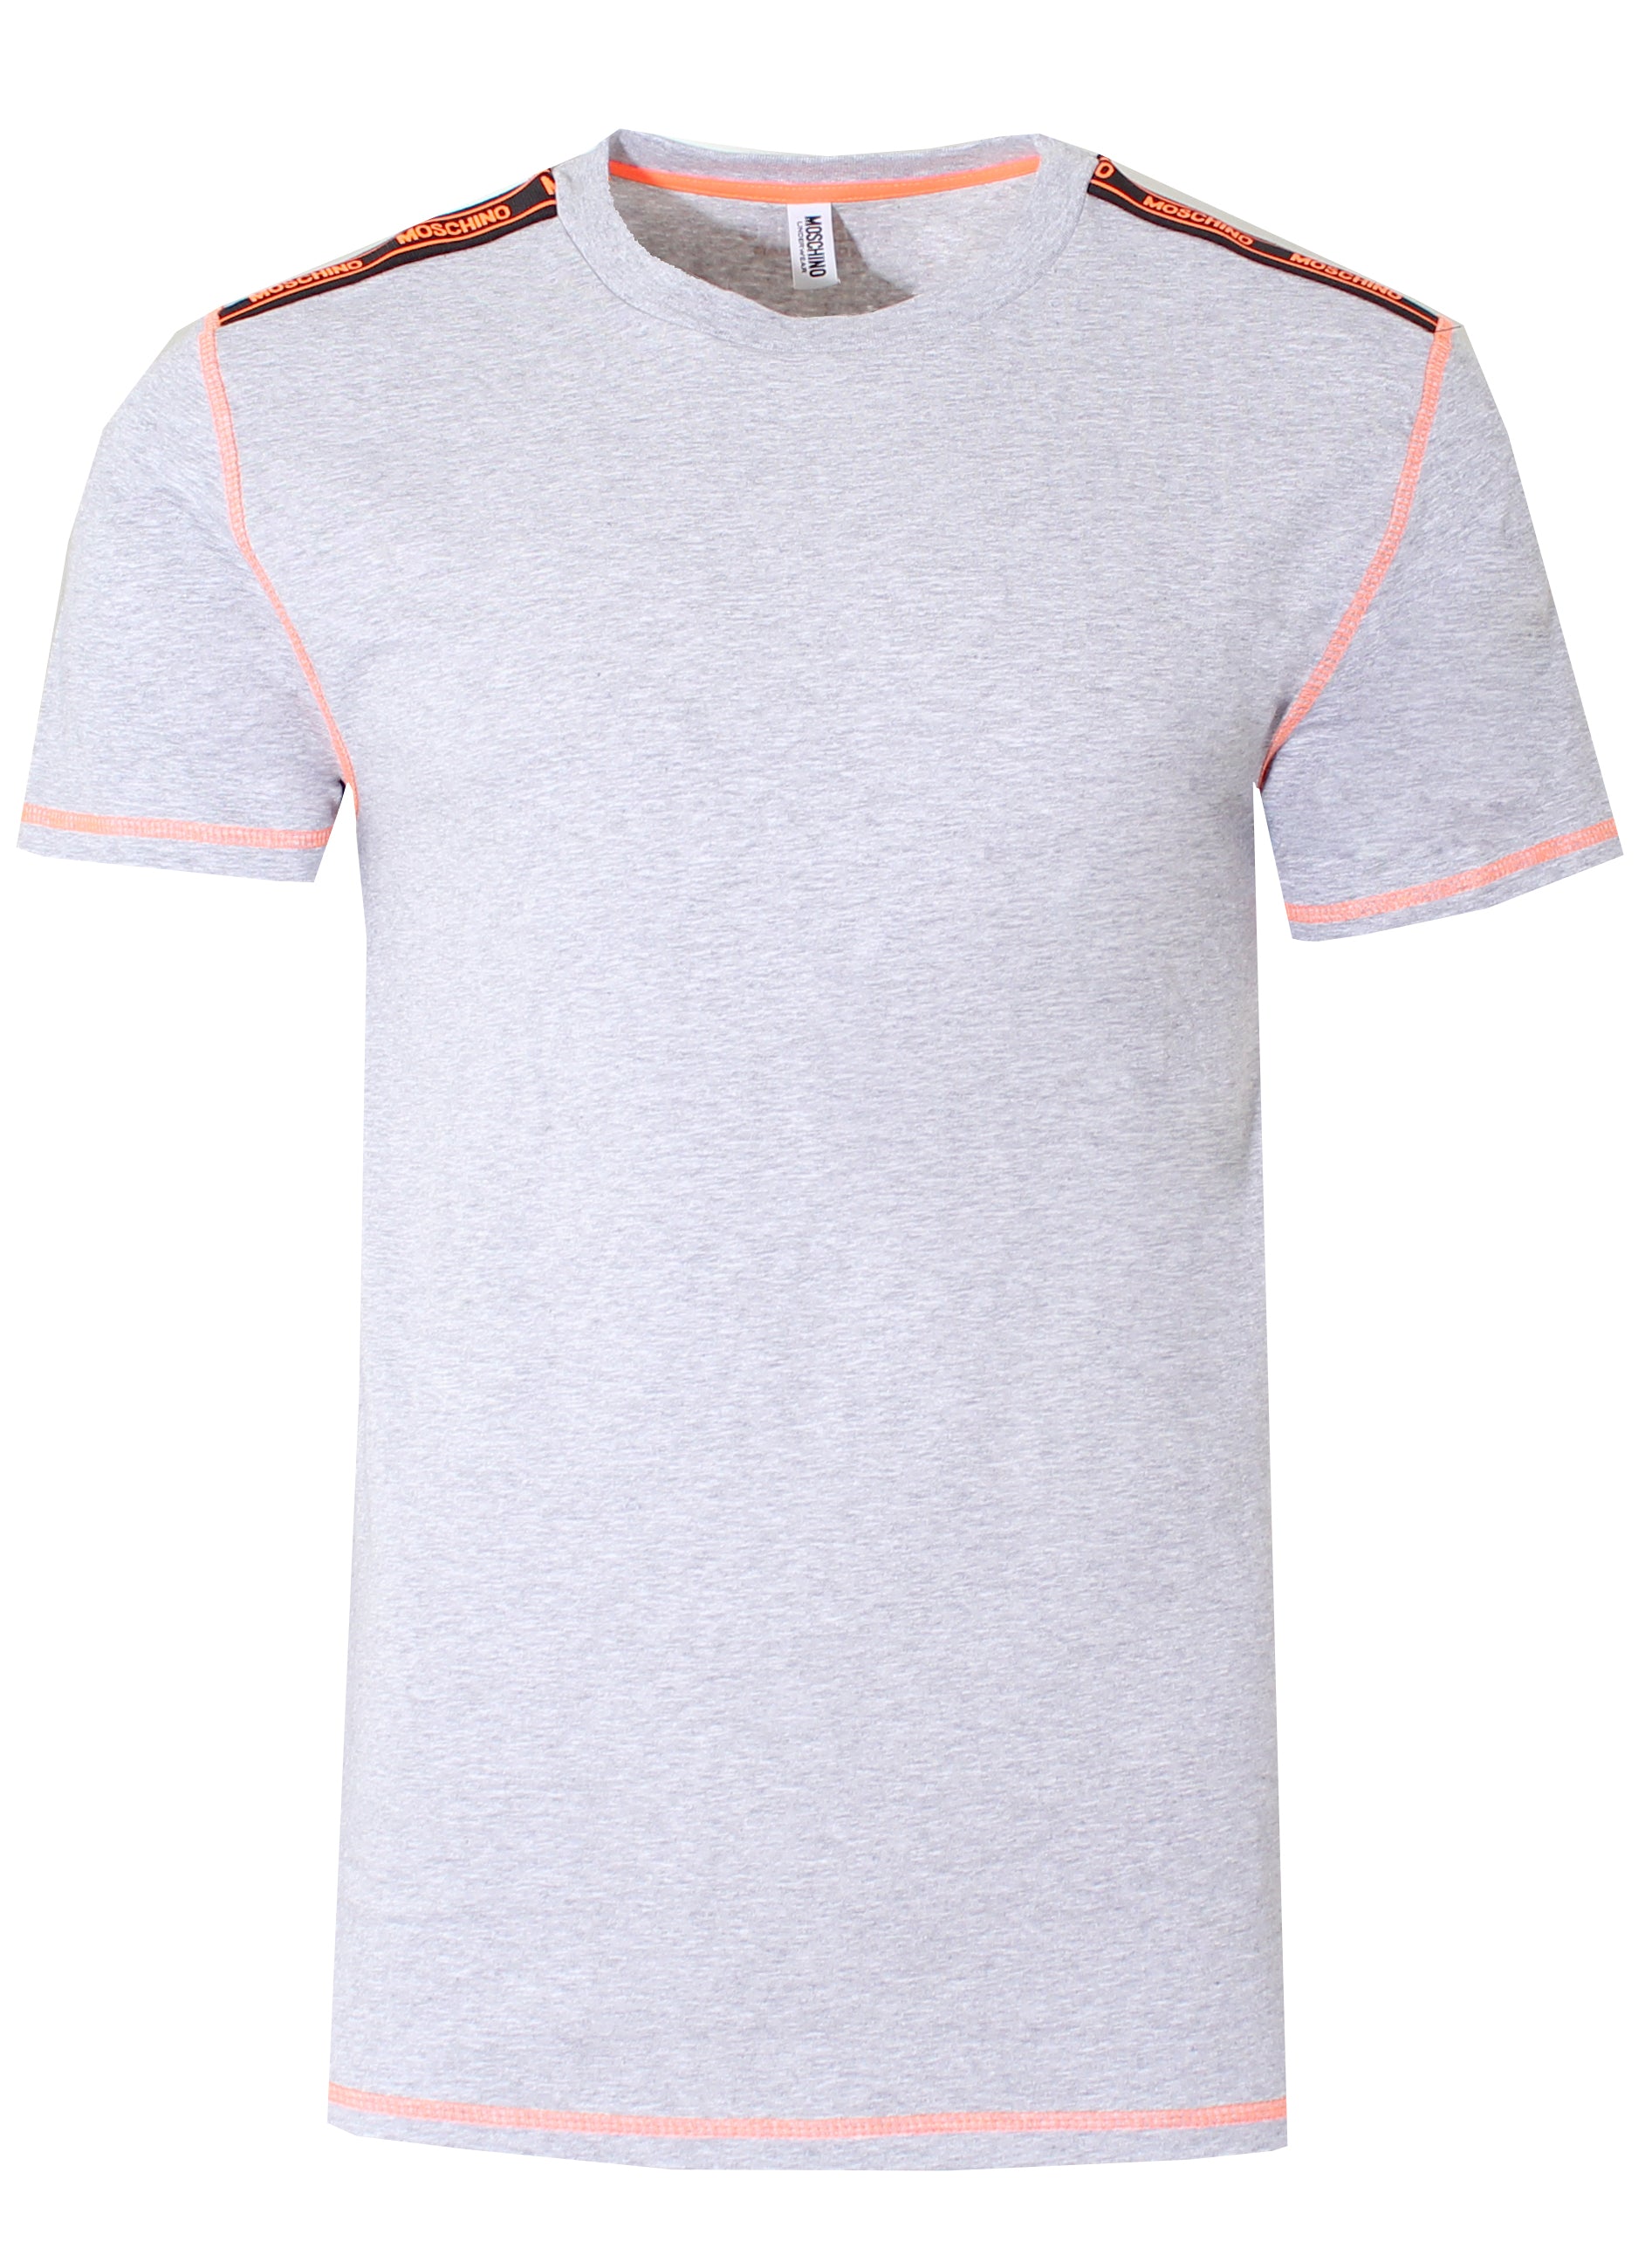 Men's Short Sleeve Moschino with Orange Side Stripe Tee Shirt-Grey